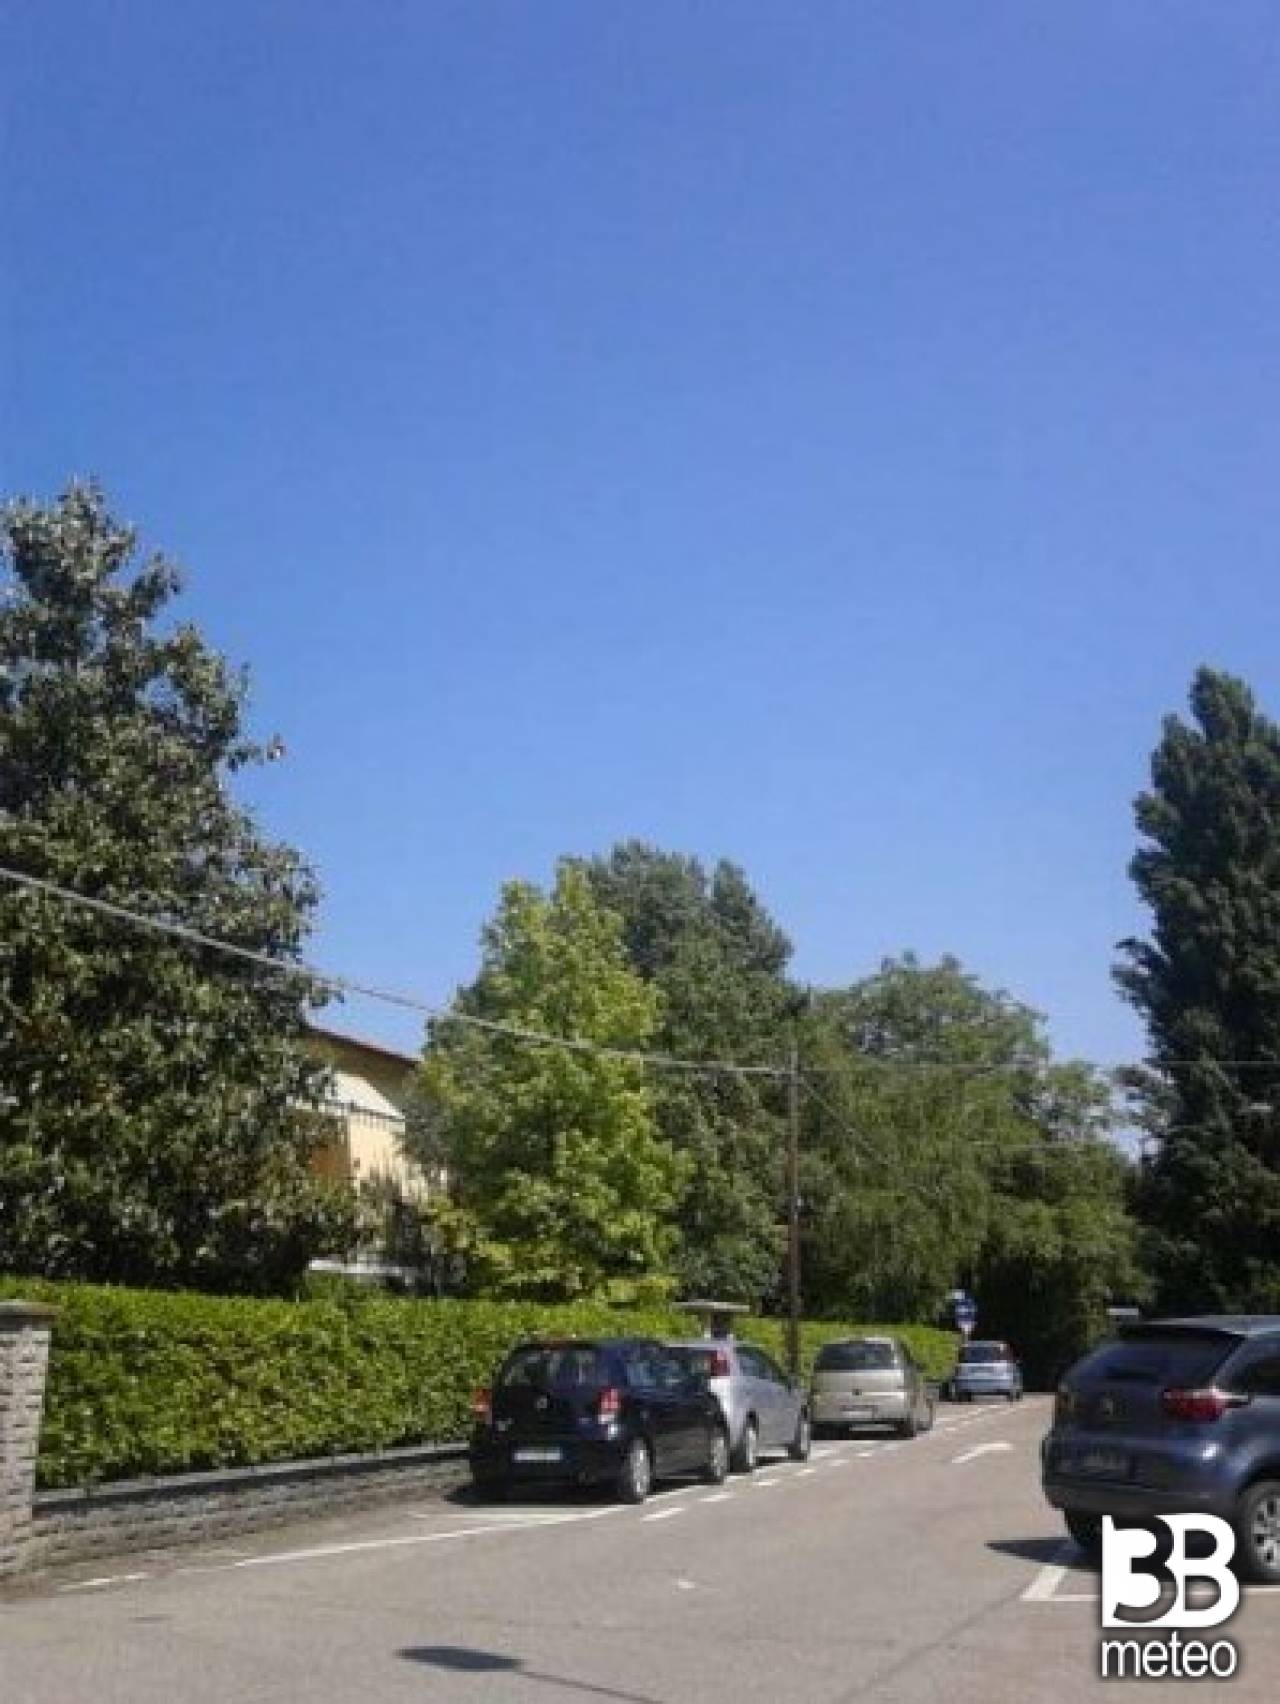 Meteo Pesaro: molte nubi giovedì, bel tempo venerdì, discreto sabato - 3bmeteo